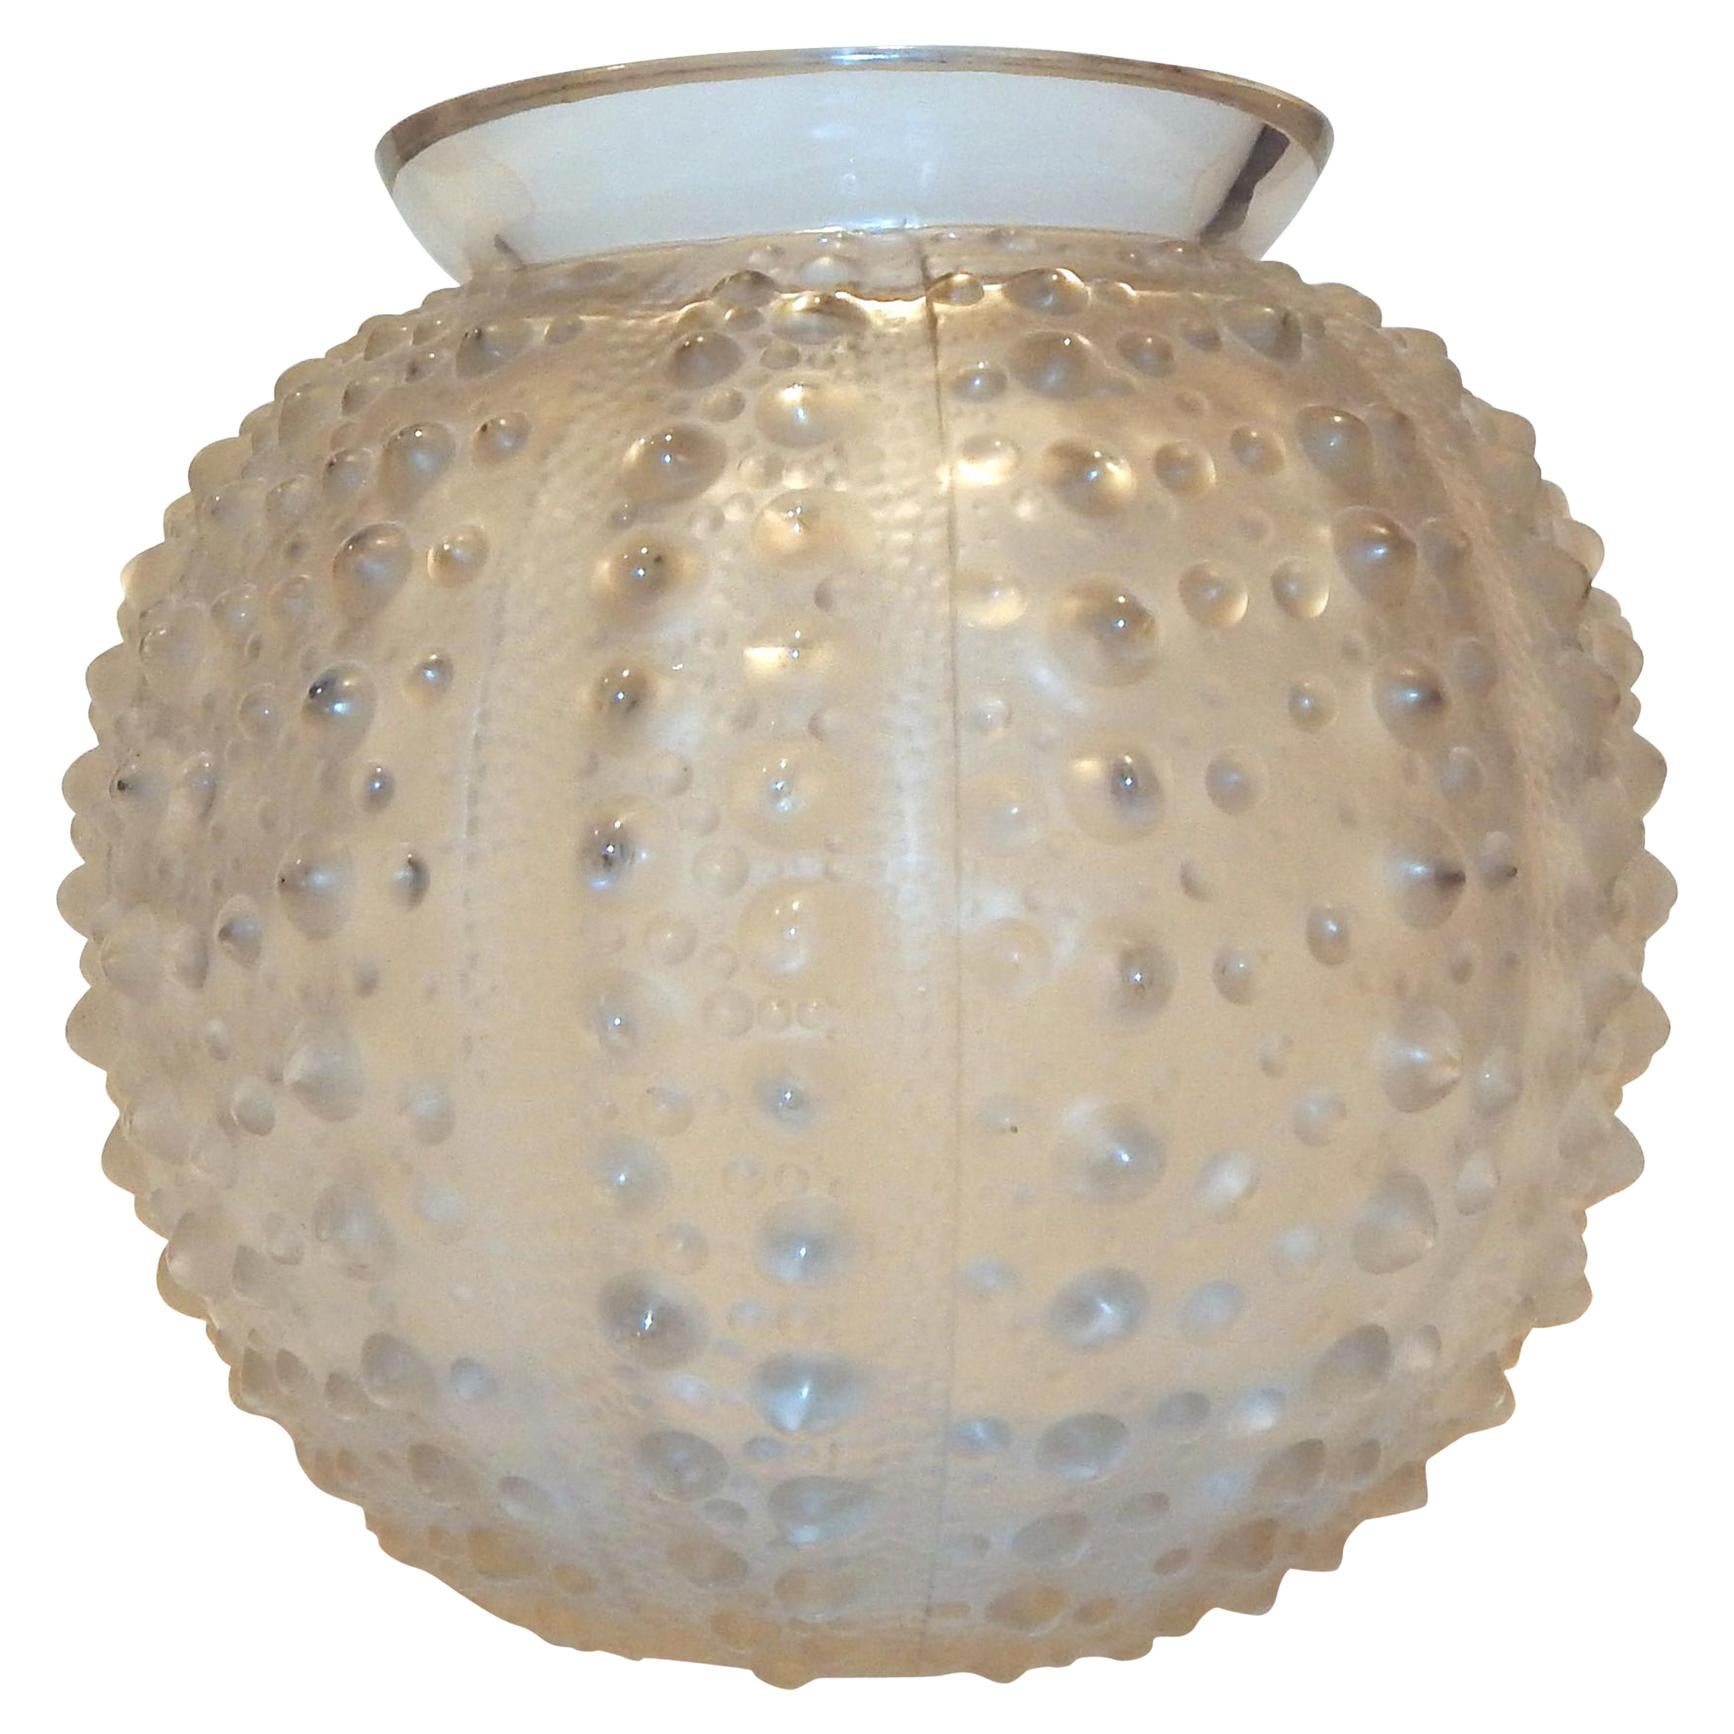 R. Lalique "Oursin" or Sea Urchin Vase, circa 1935